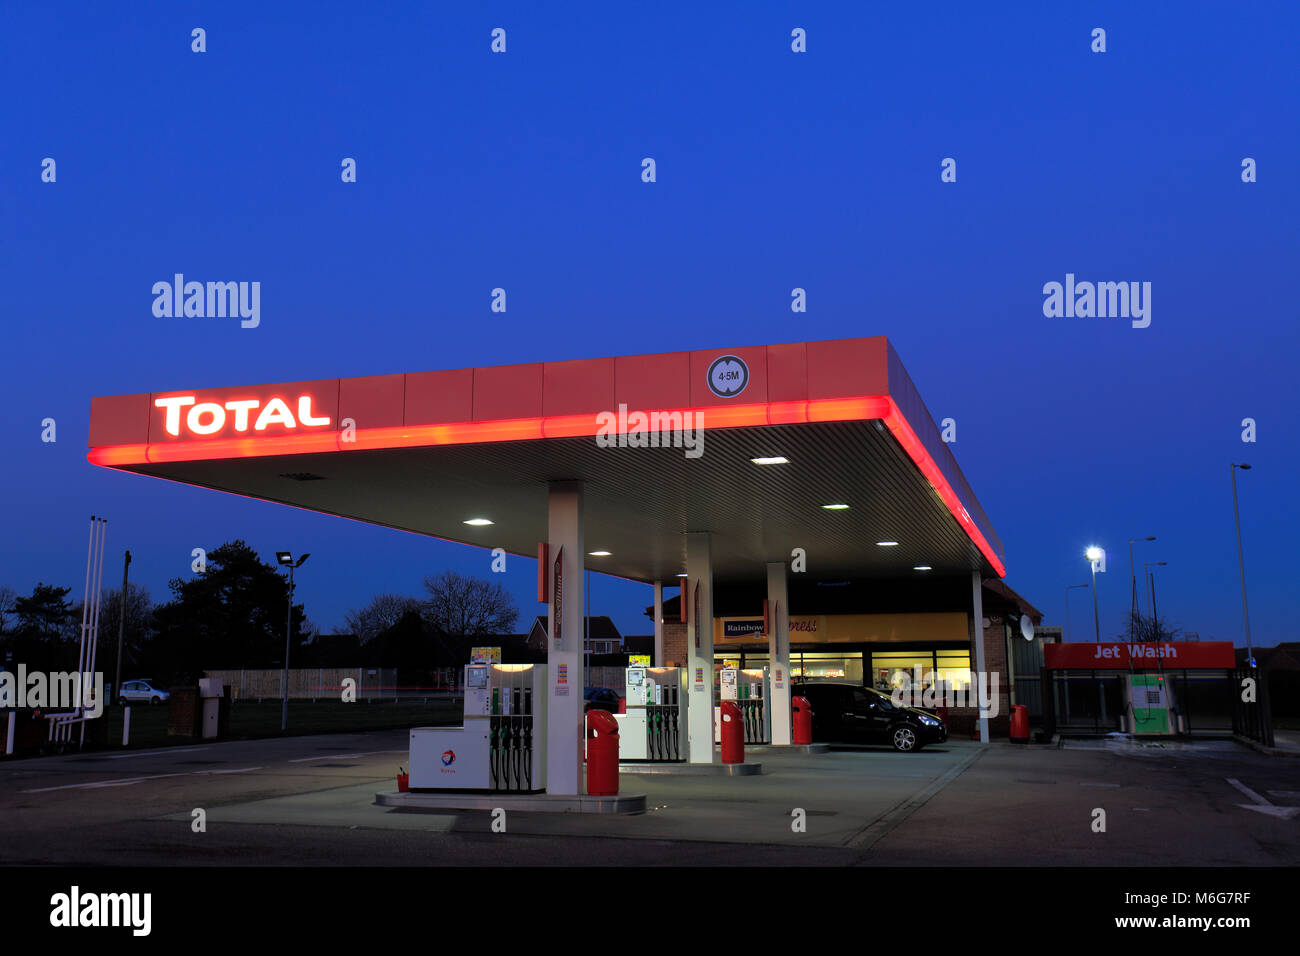 Total petrol Station at night, Great Yarmouth, Norfolk, England, UK Stock Photo